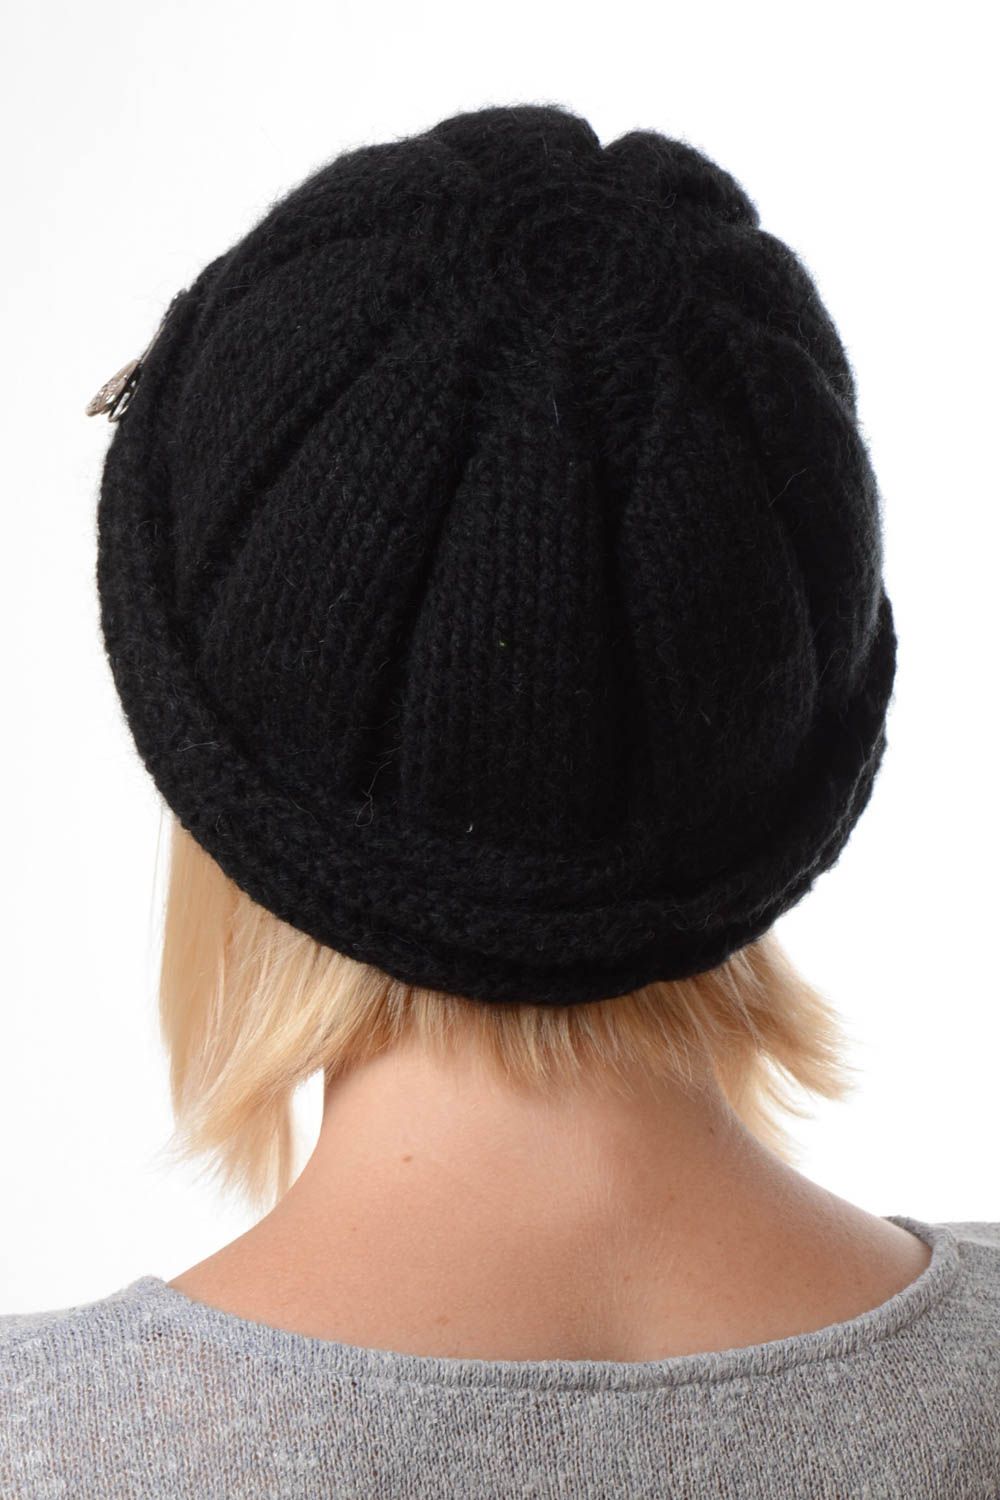 Ladies winter hat handmade crochet hat crochet accessories fashion accessories photo 2